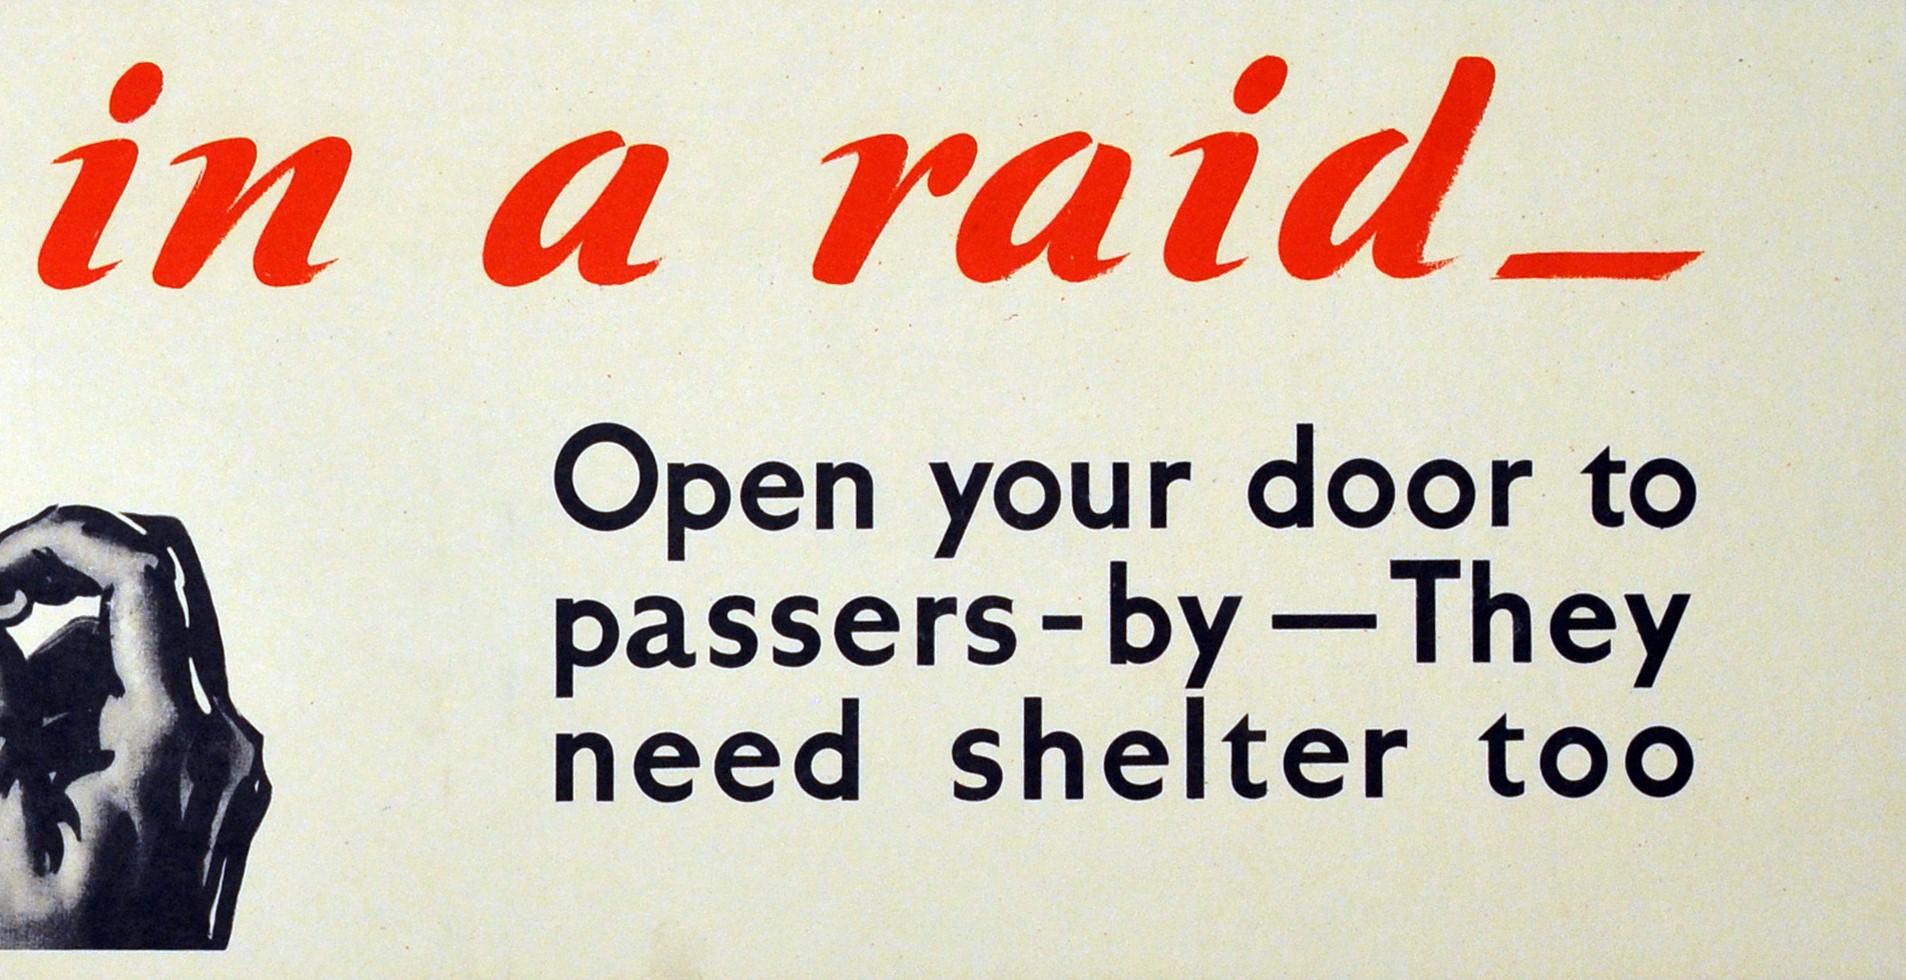 British Original Vintage WWII Home Front Poster In A Raid Open Your Door ft ARP Warden